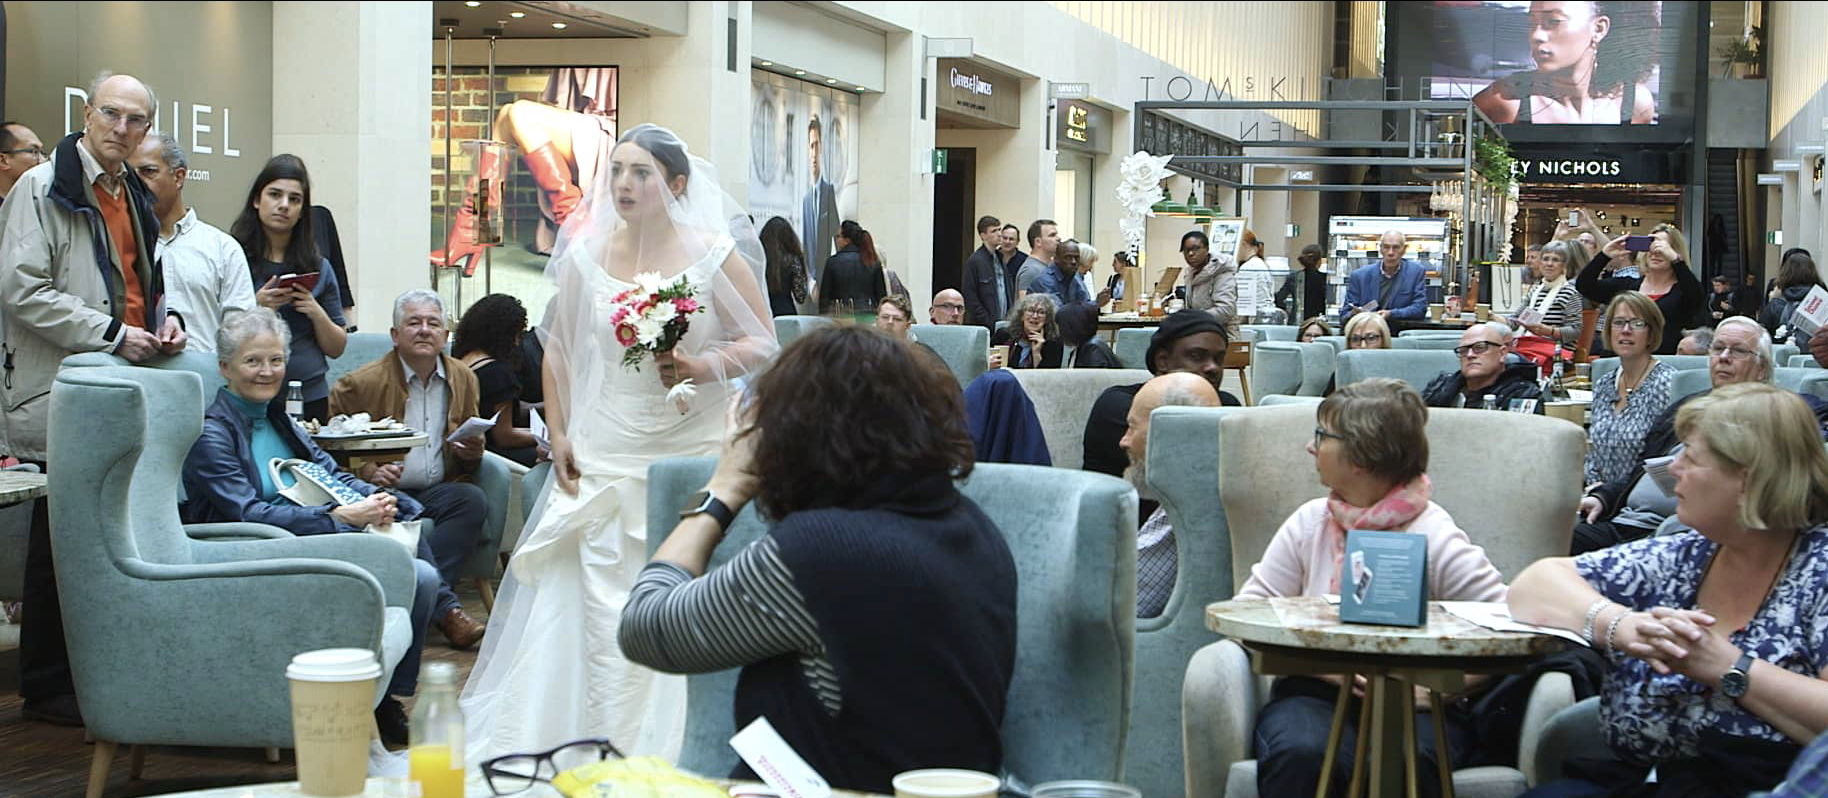 A woman in a wedding dress passes through a café.